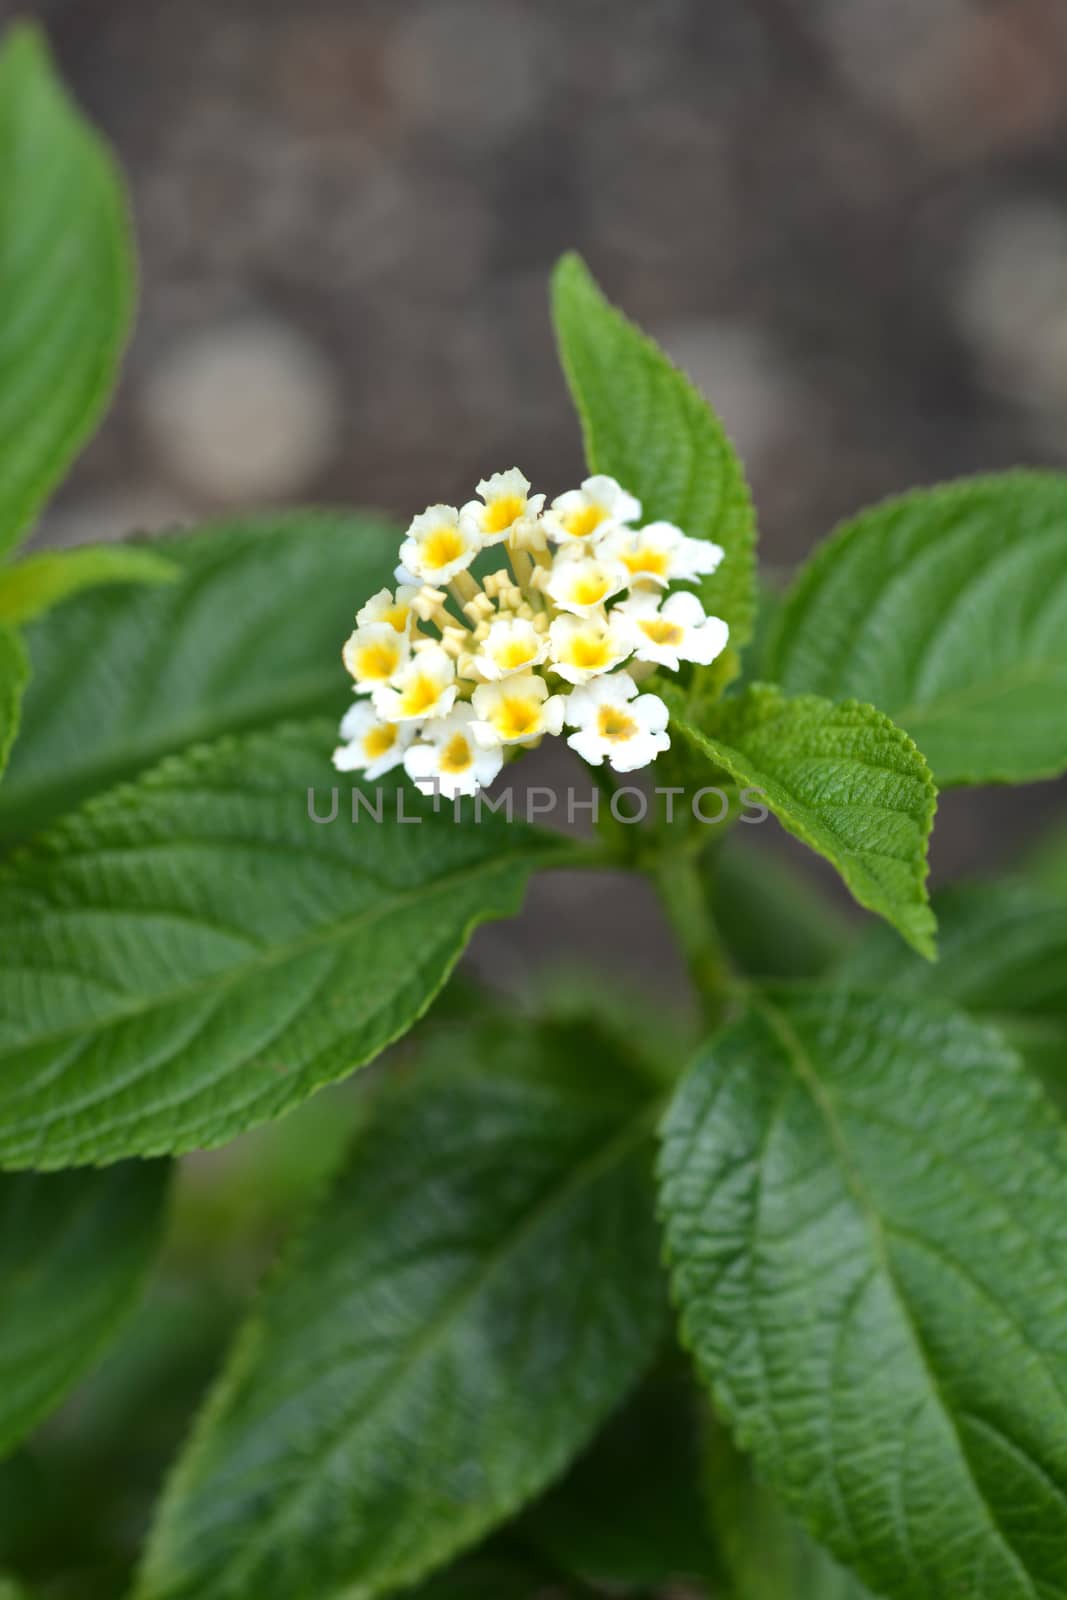 Shrub verbena white flower close up - Latin name - Lantana camara